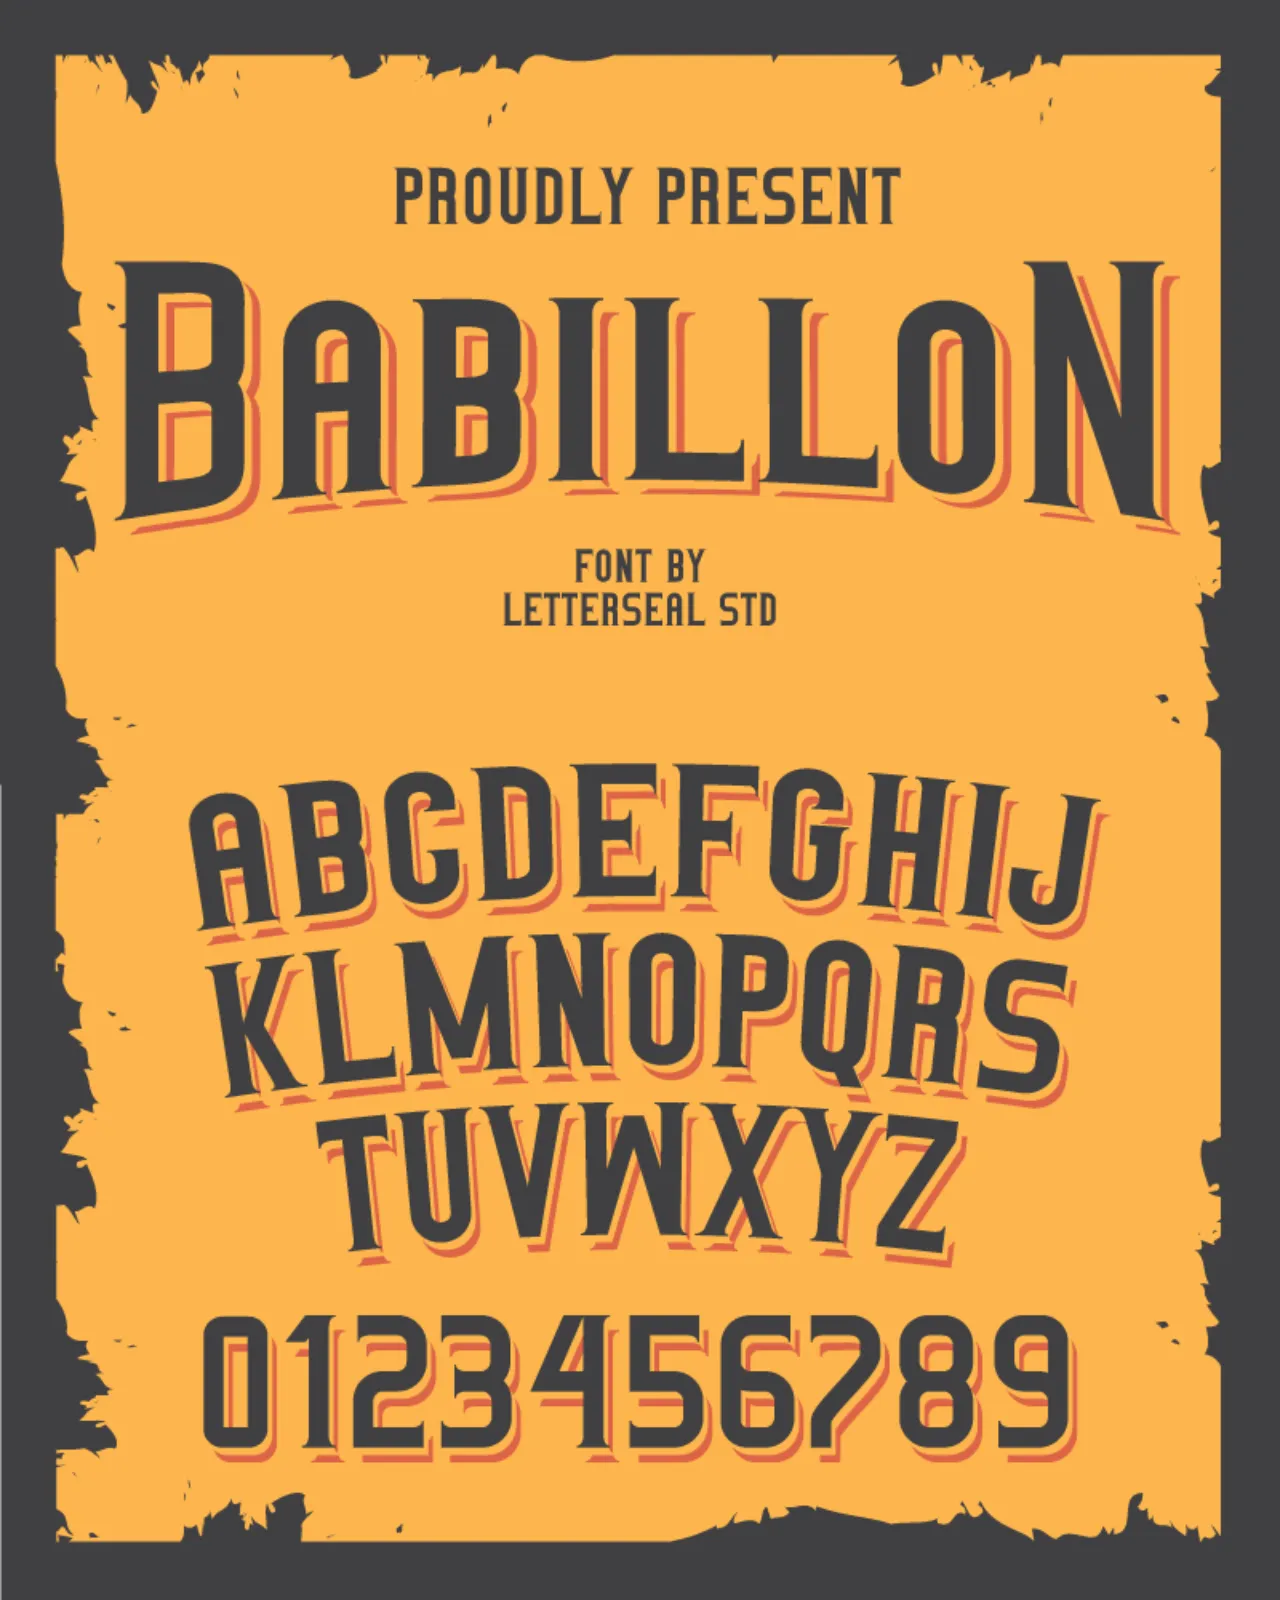 Font Babillon Letterseal